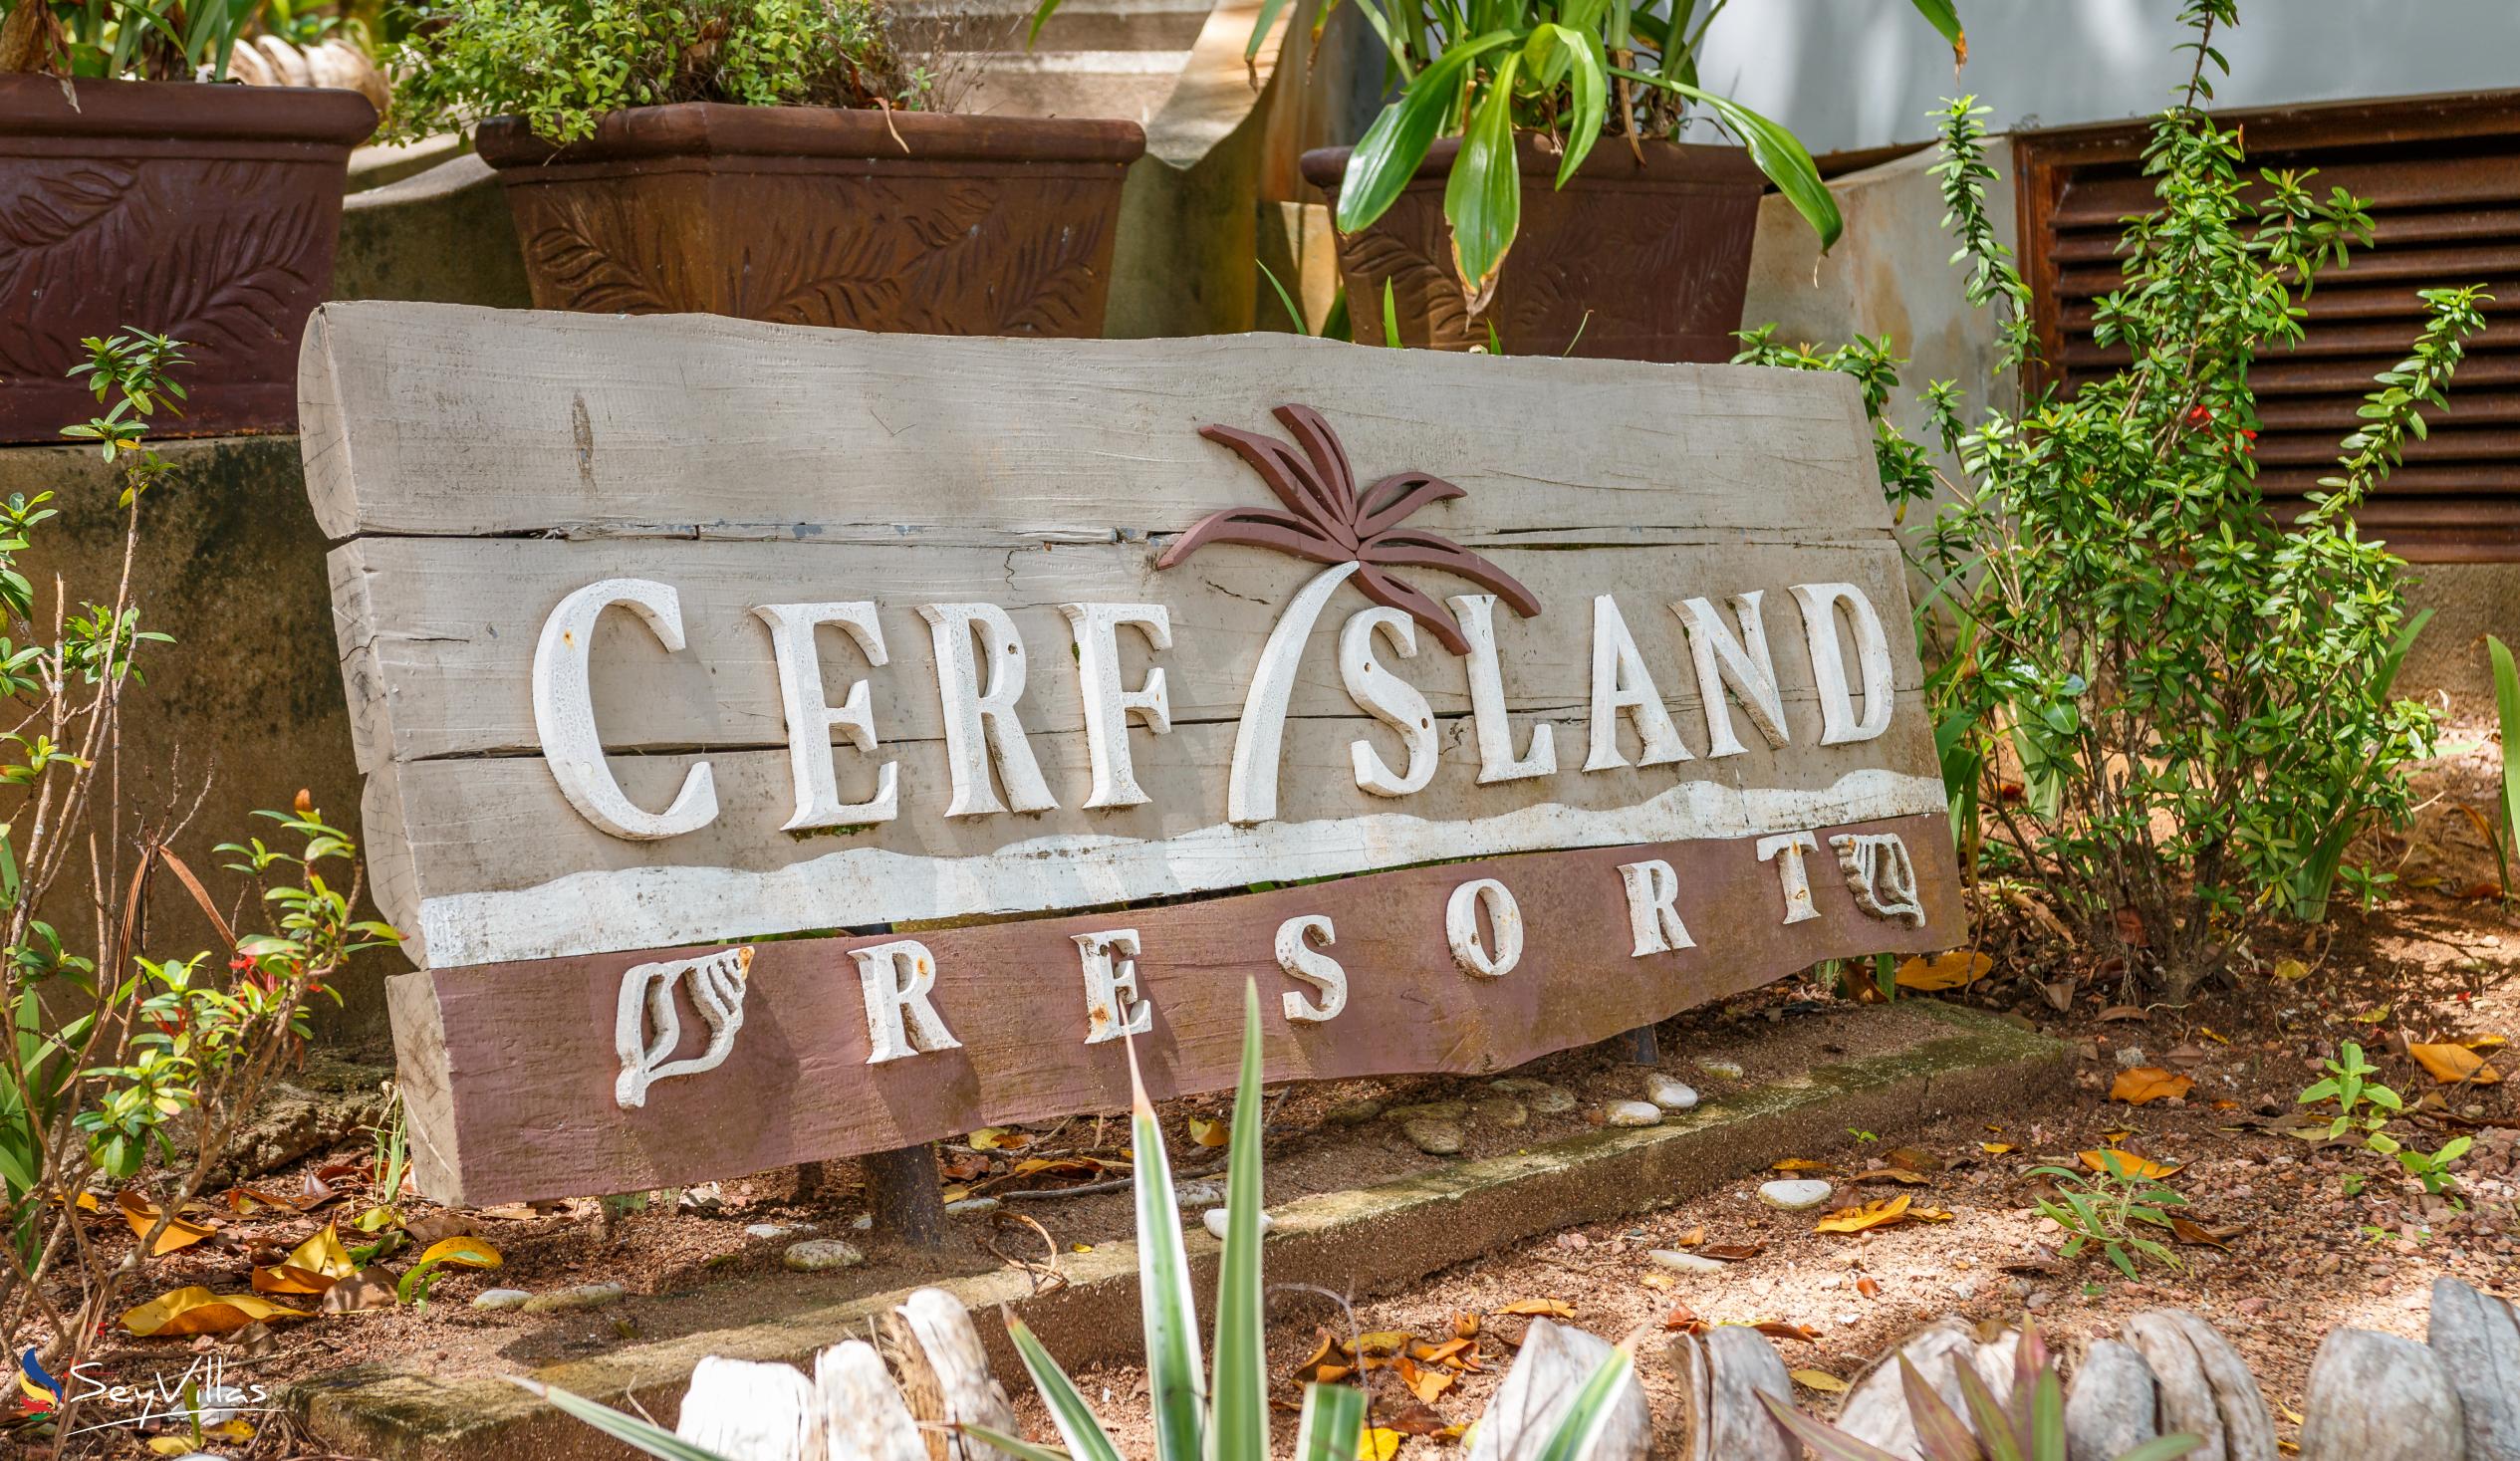 Photo 12: Cerf Island Resort - Outdoor area - Cerf Island (Seychelles)